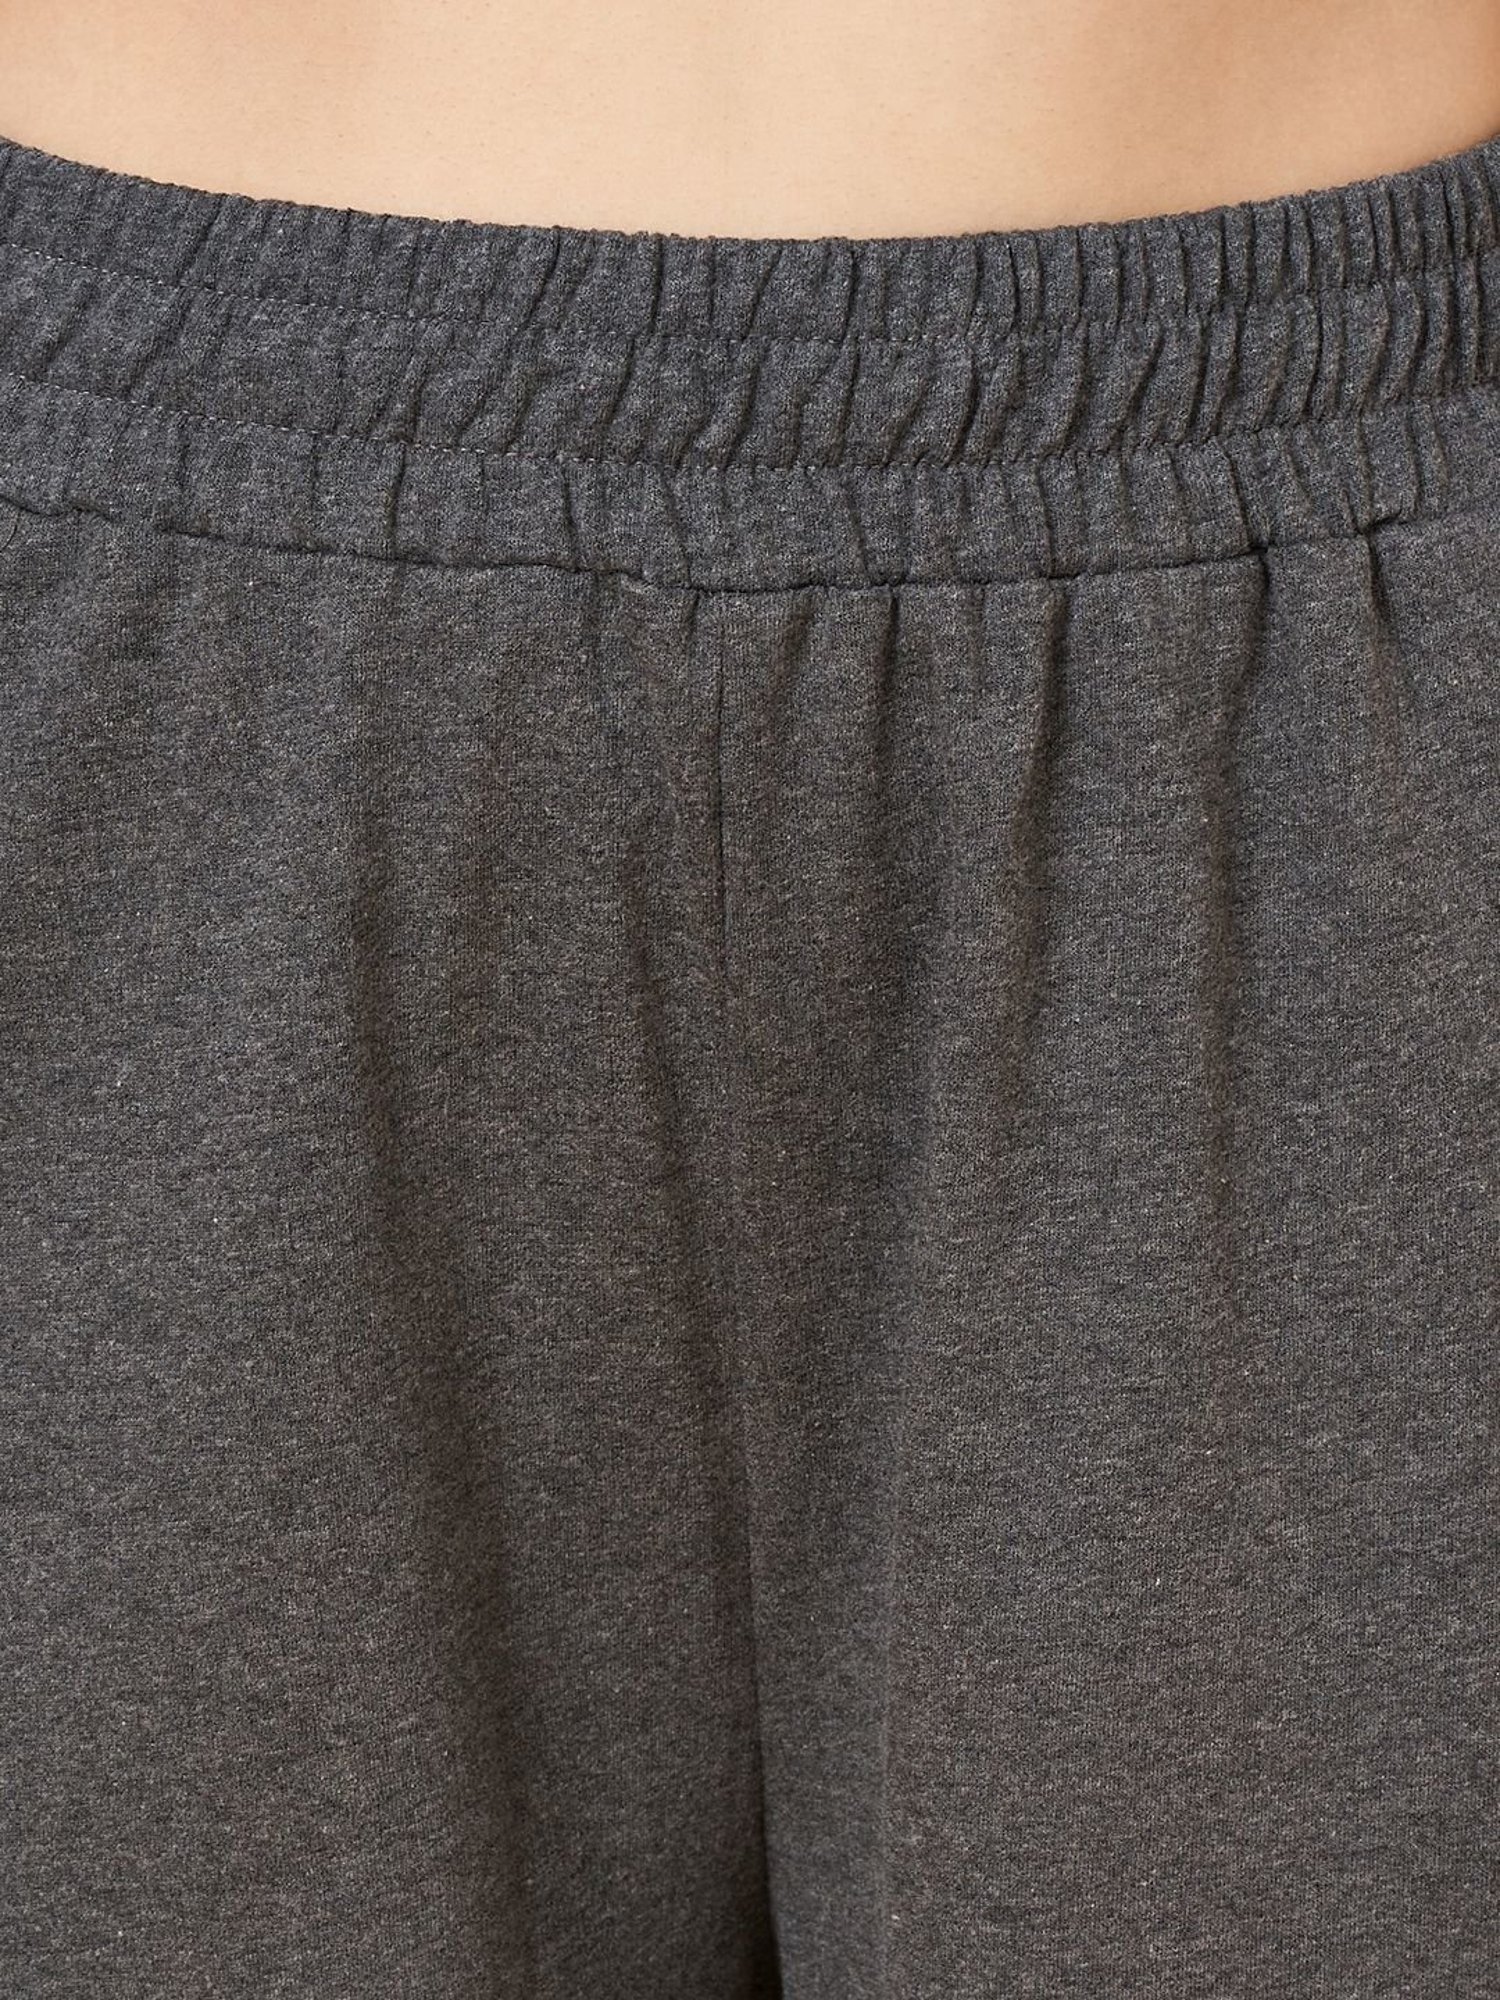 Ajile By Pantaloons Grey Solid Capri - Buy Ajile By Pantaloons Grey Solid  Capri online in India